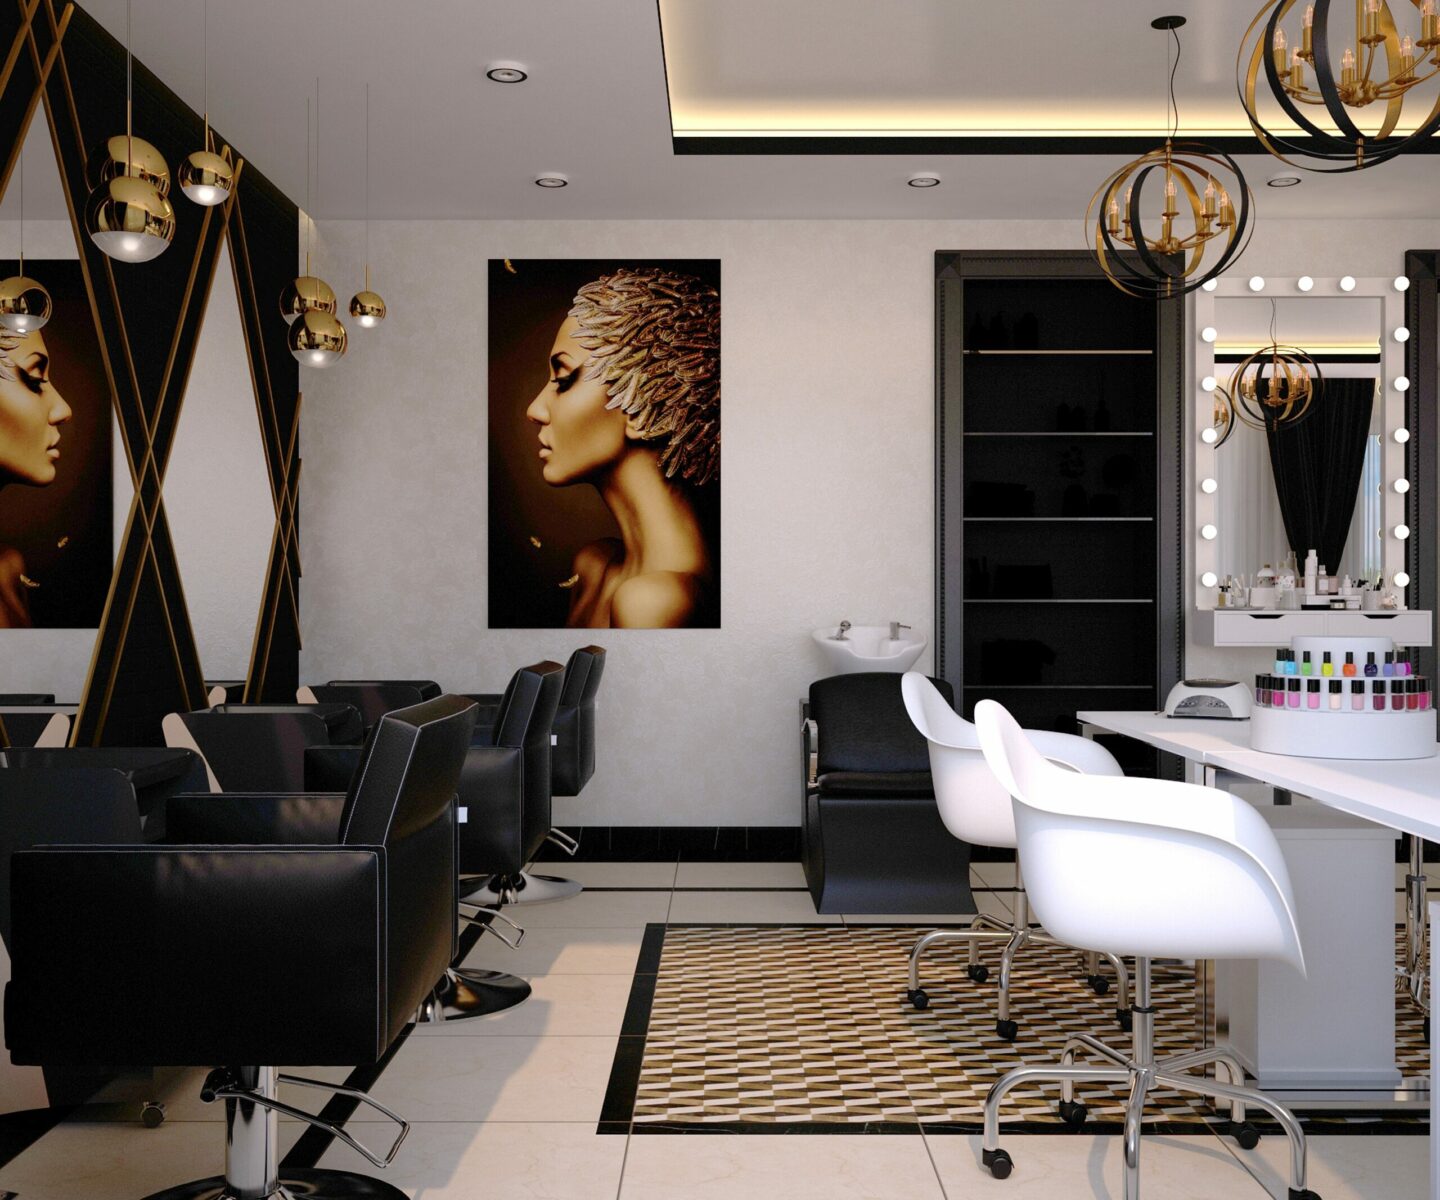 Free Image/jpeg Resolution: 3000x2501, File Size: 2.08Mb, Interior Of A Modern Beauty Salon